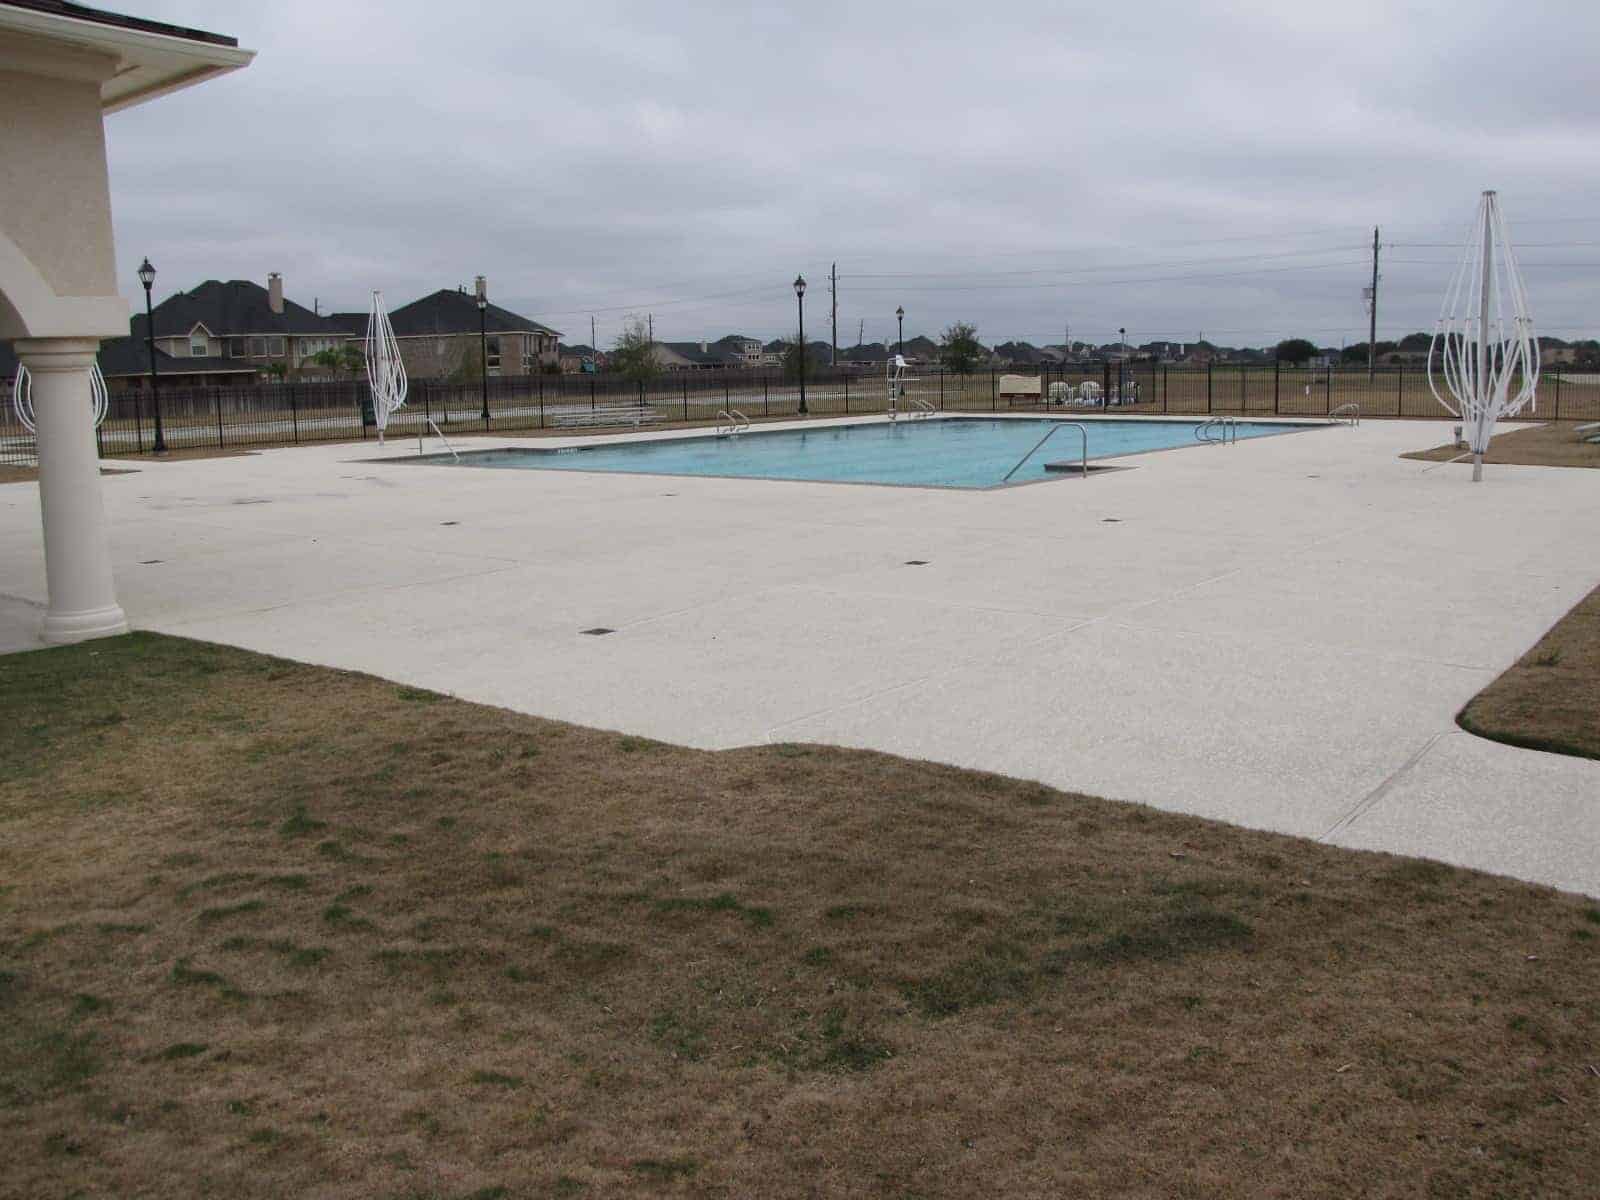 Firethorne Competitive Swim Center 3 in Katy TX